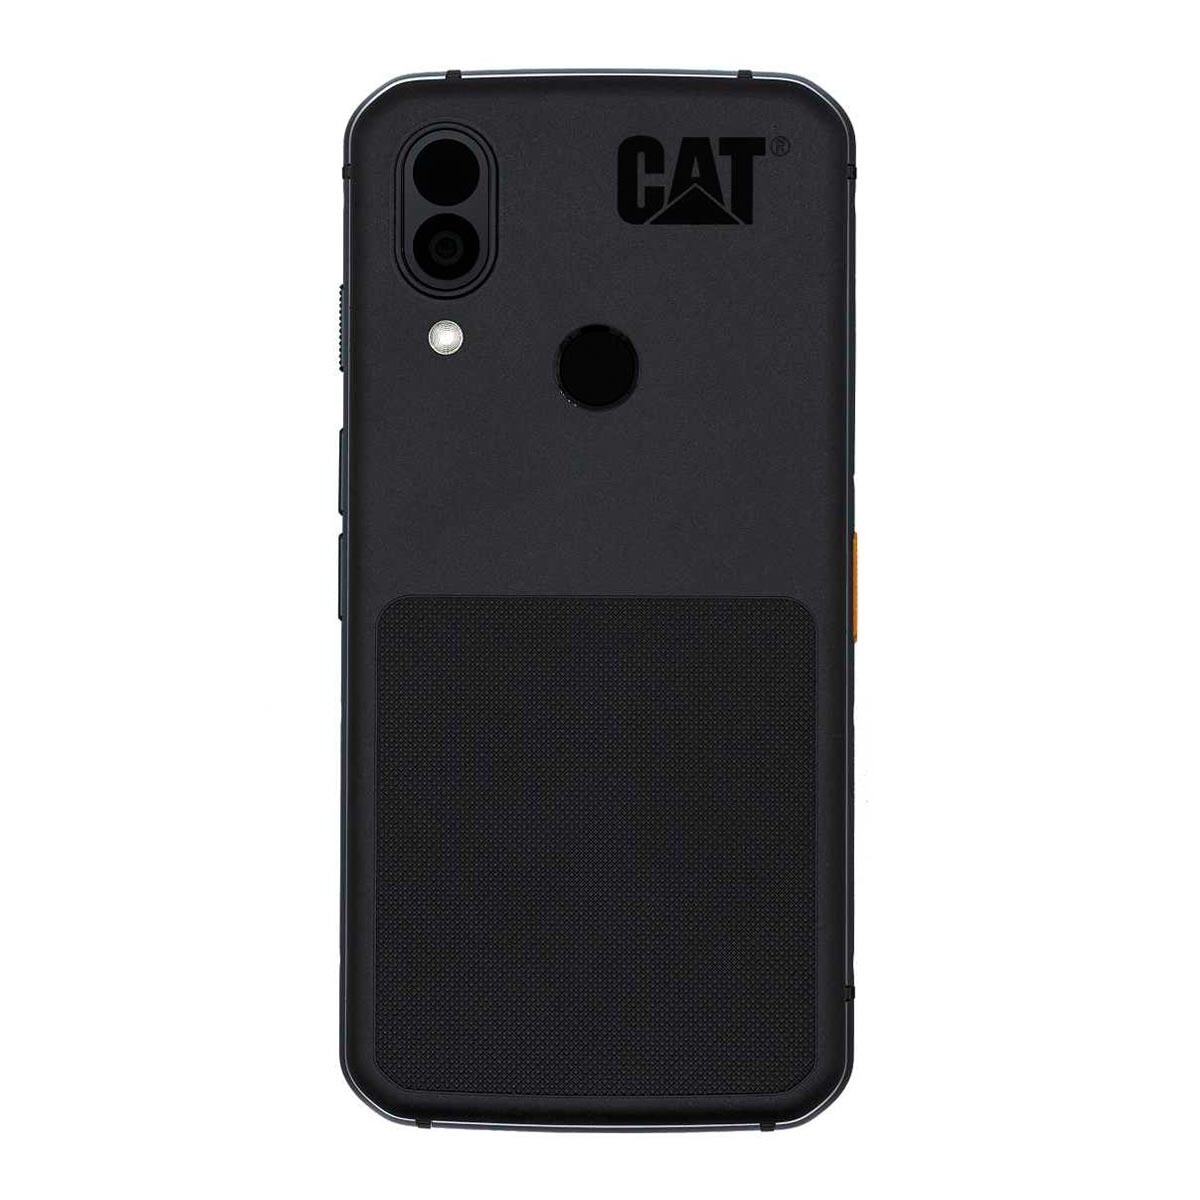 CAT S62 Pro 三防軍規熱感應相機智慧型手機 128GB